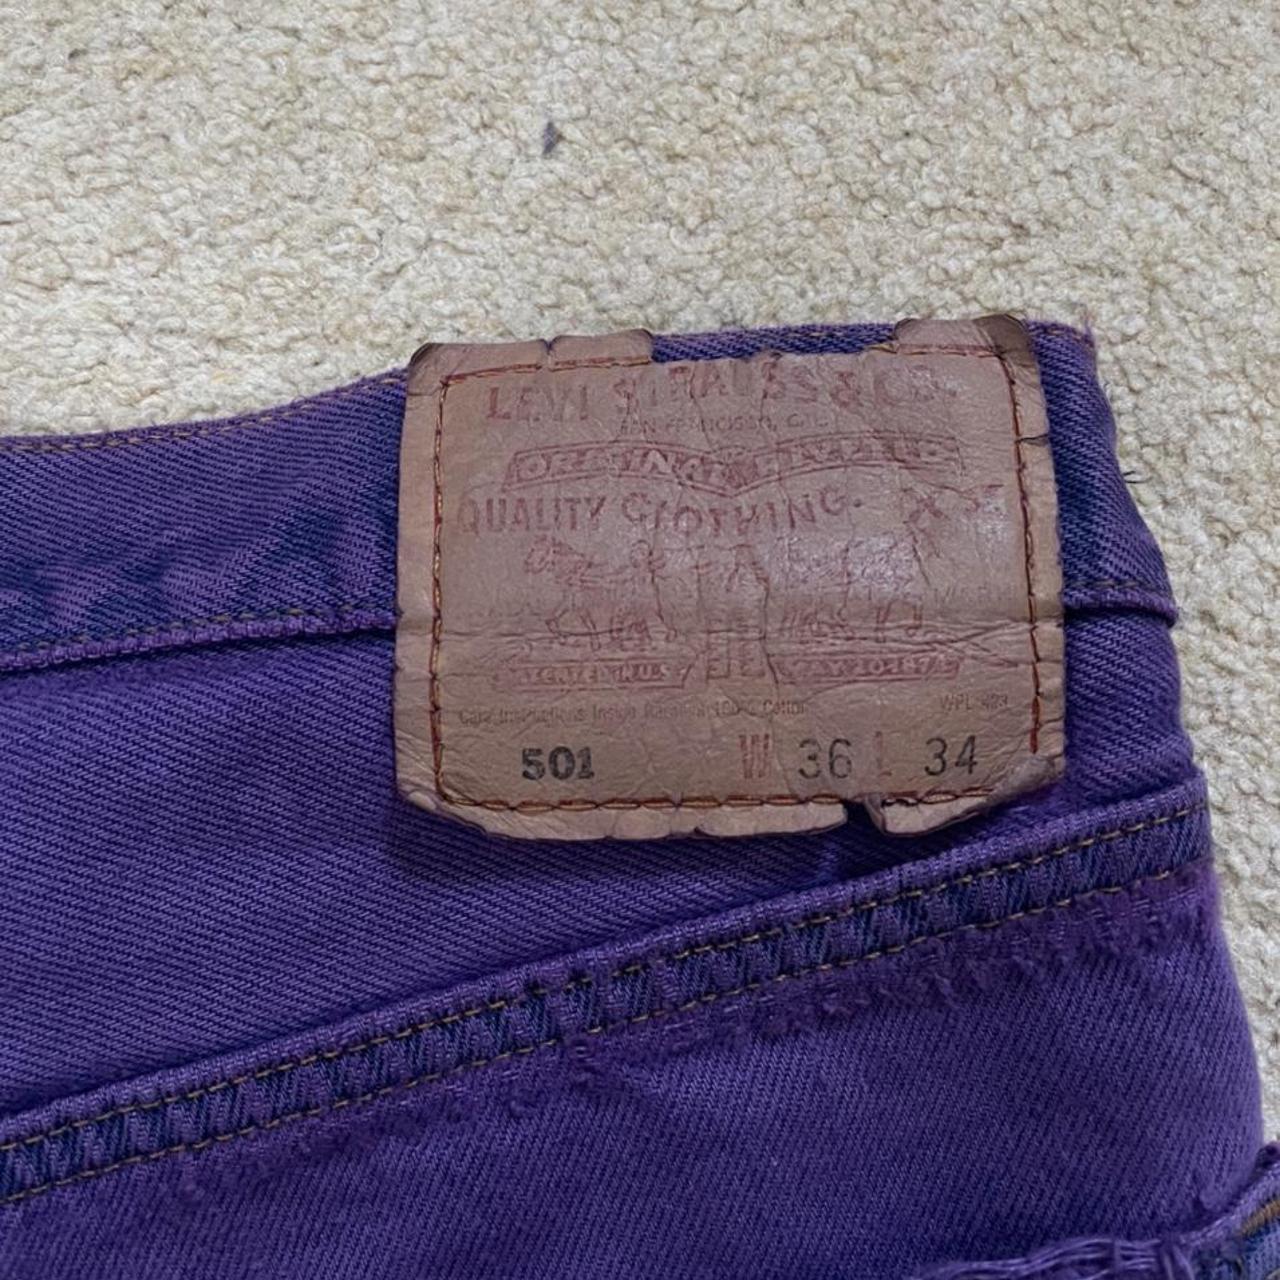 Vintage purple ripped denim shorts Waist 36 leg 34... - Depop